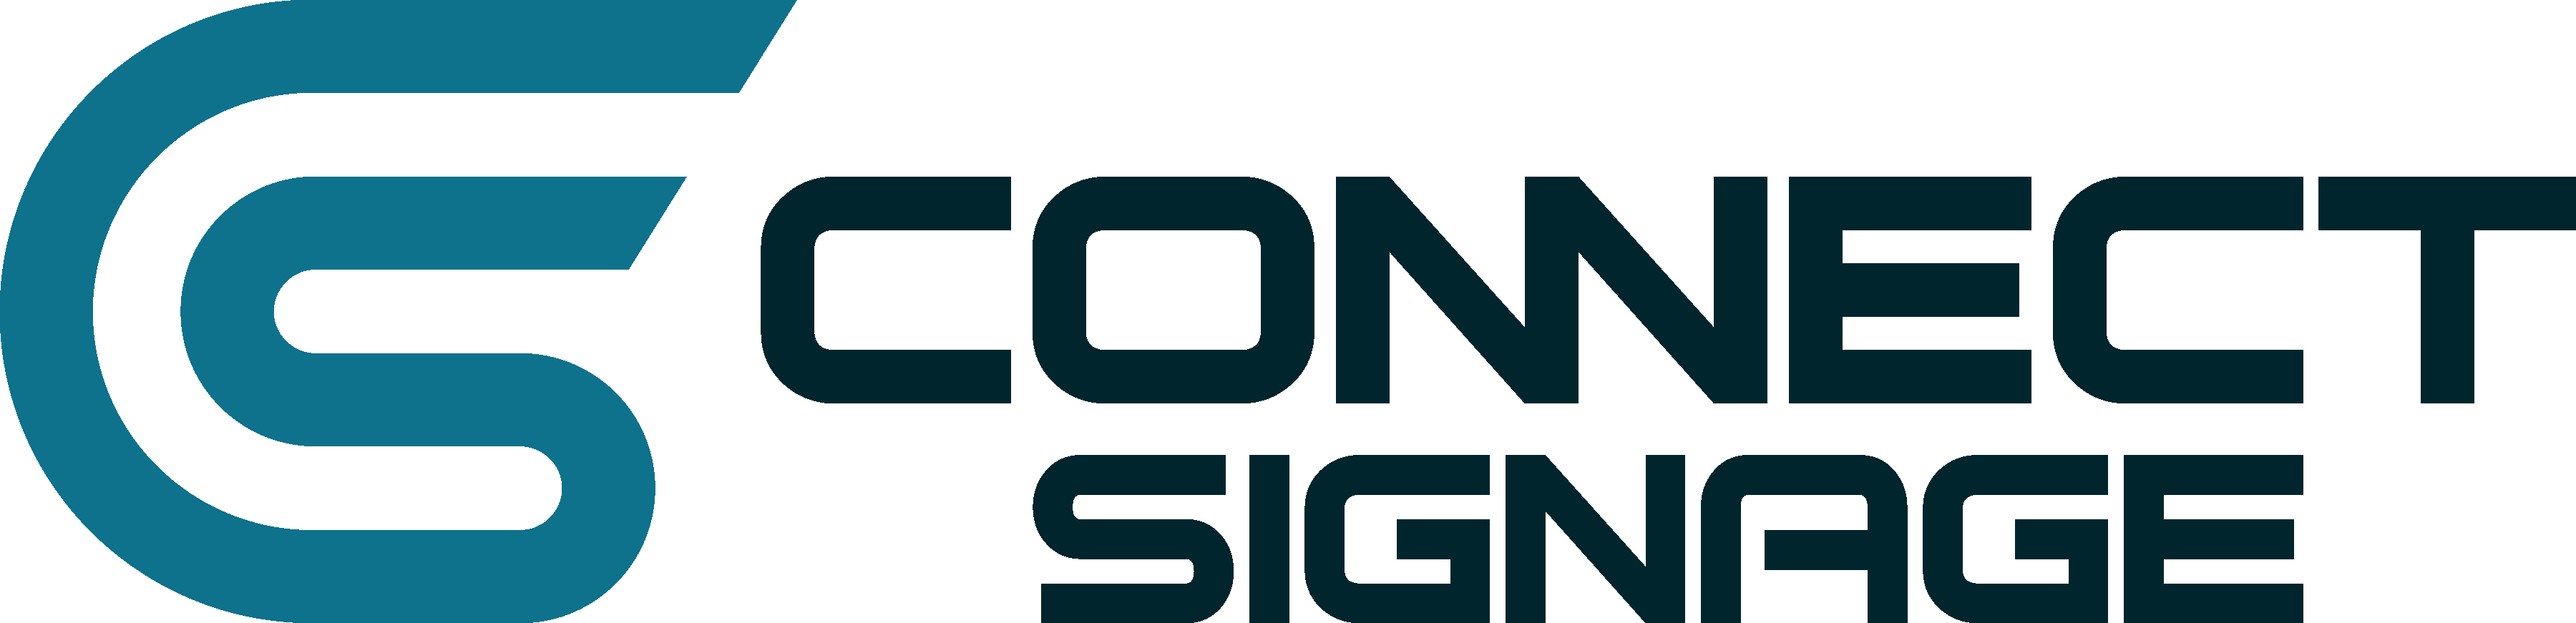  Connect signage logo full colour rgb 2